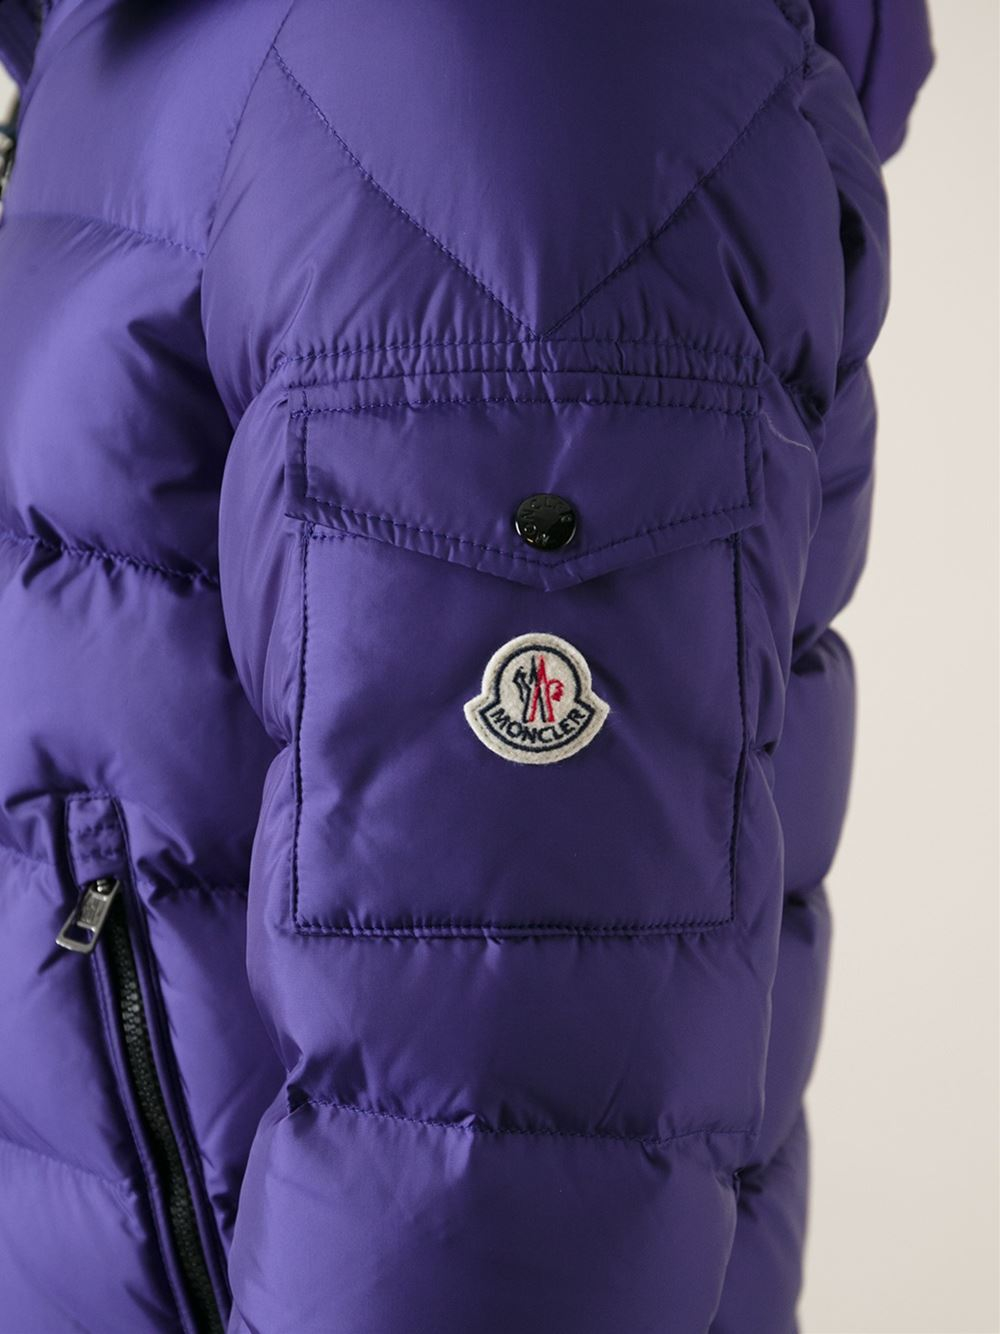 Moncler 'Maya' Padded Jacket in Pink & Purple (Purple) for Men - Lyst